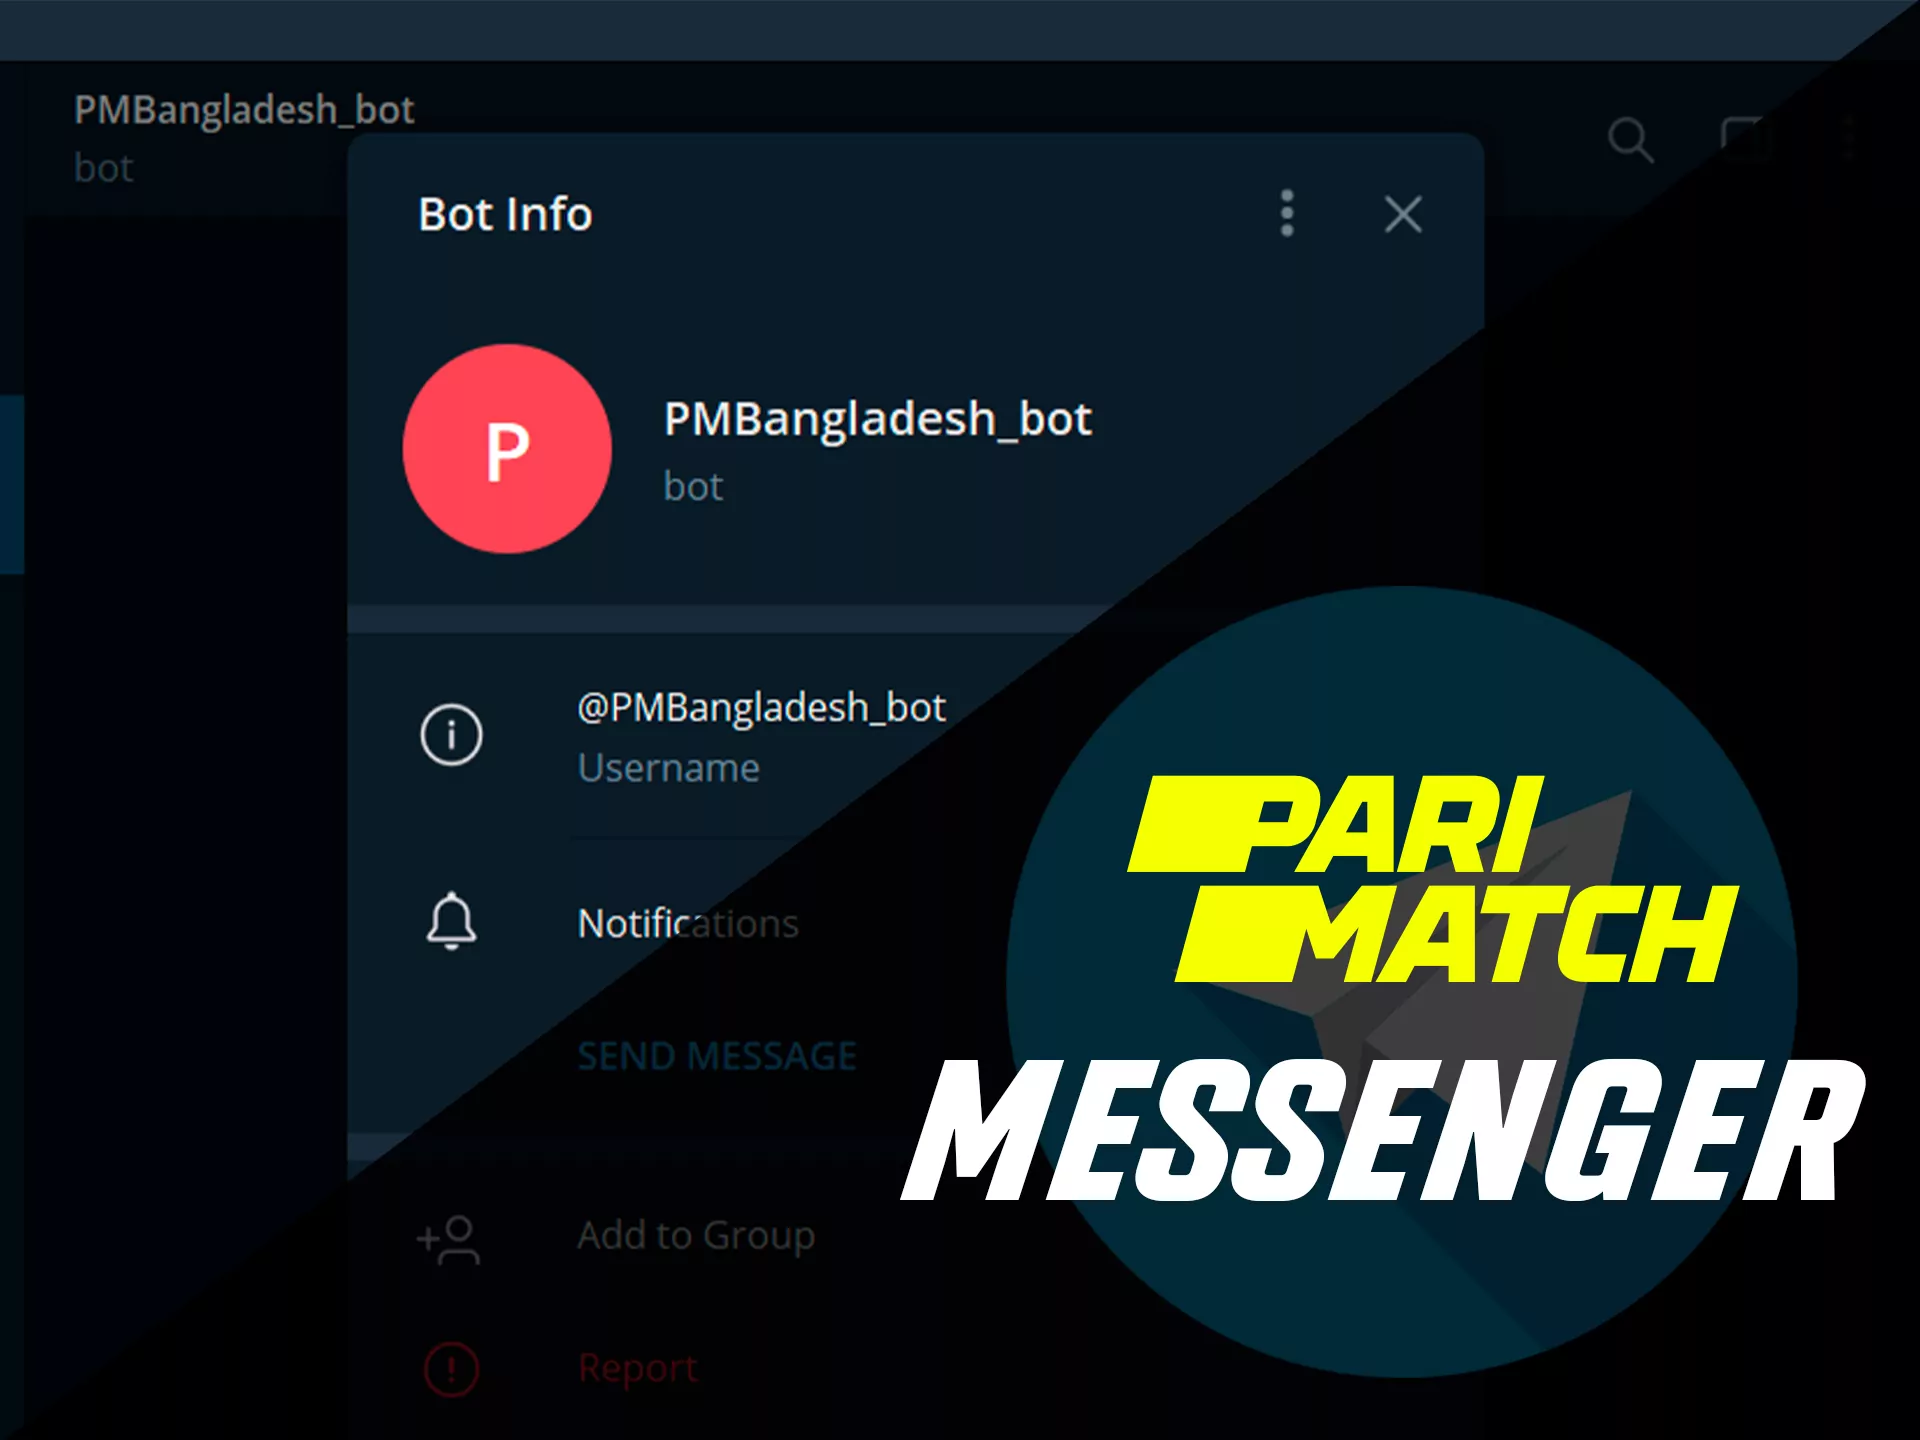 You can reach the Parimatch team on Telegram or WhatsApp.